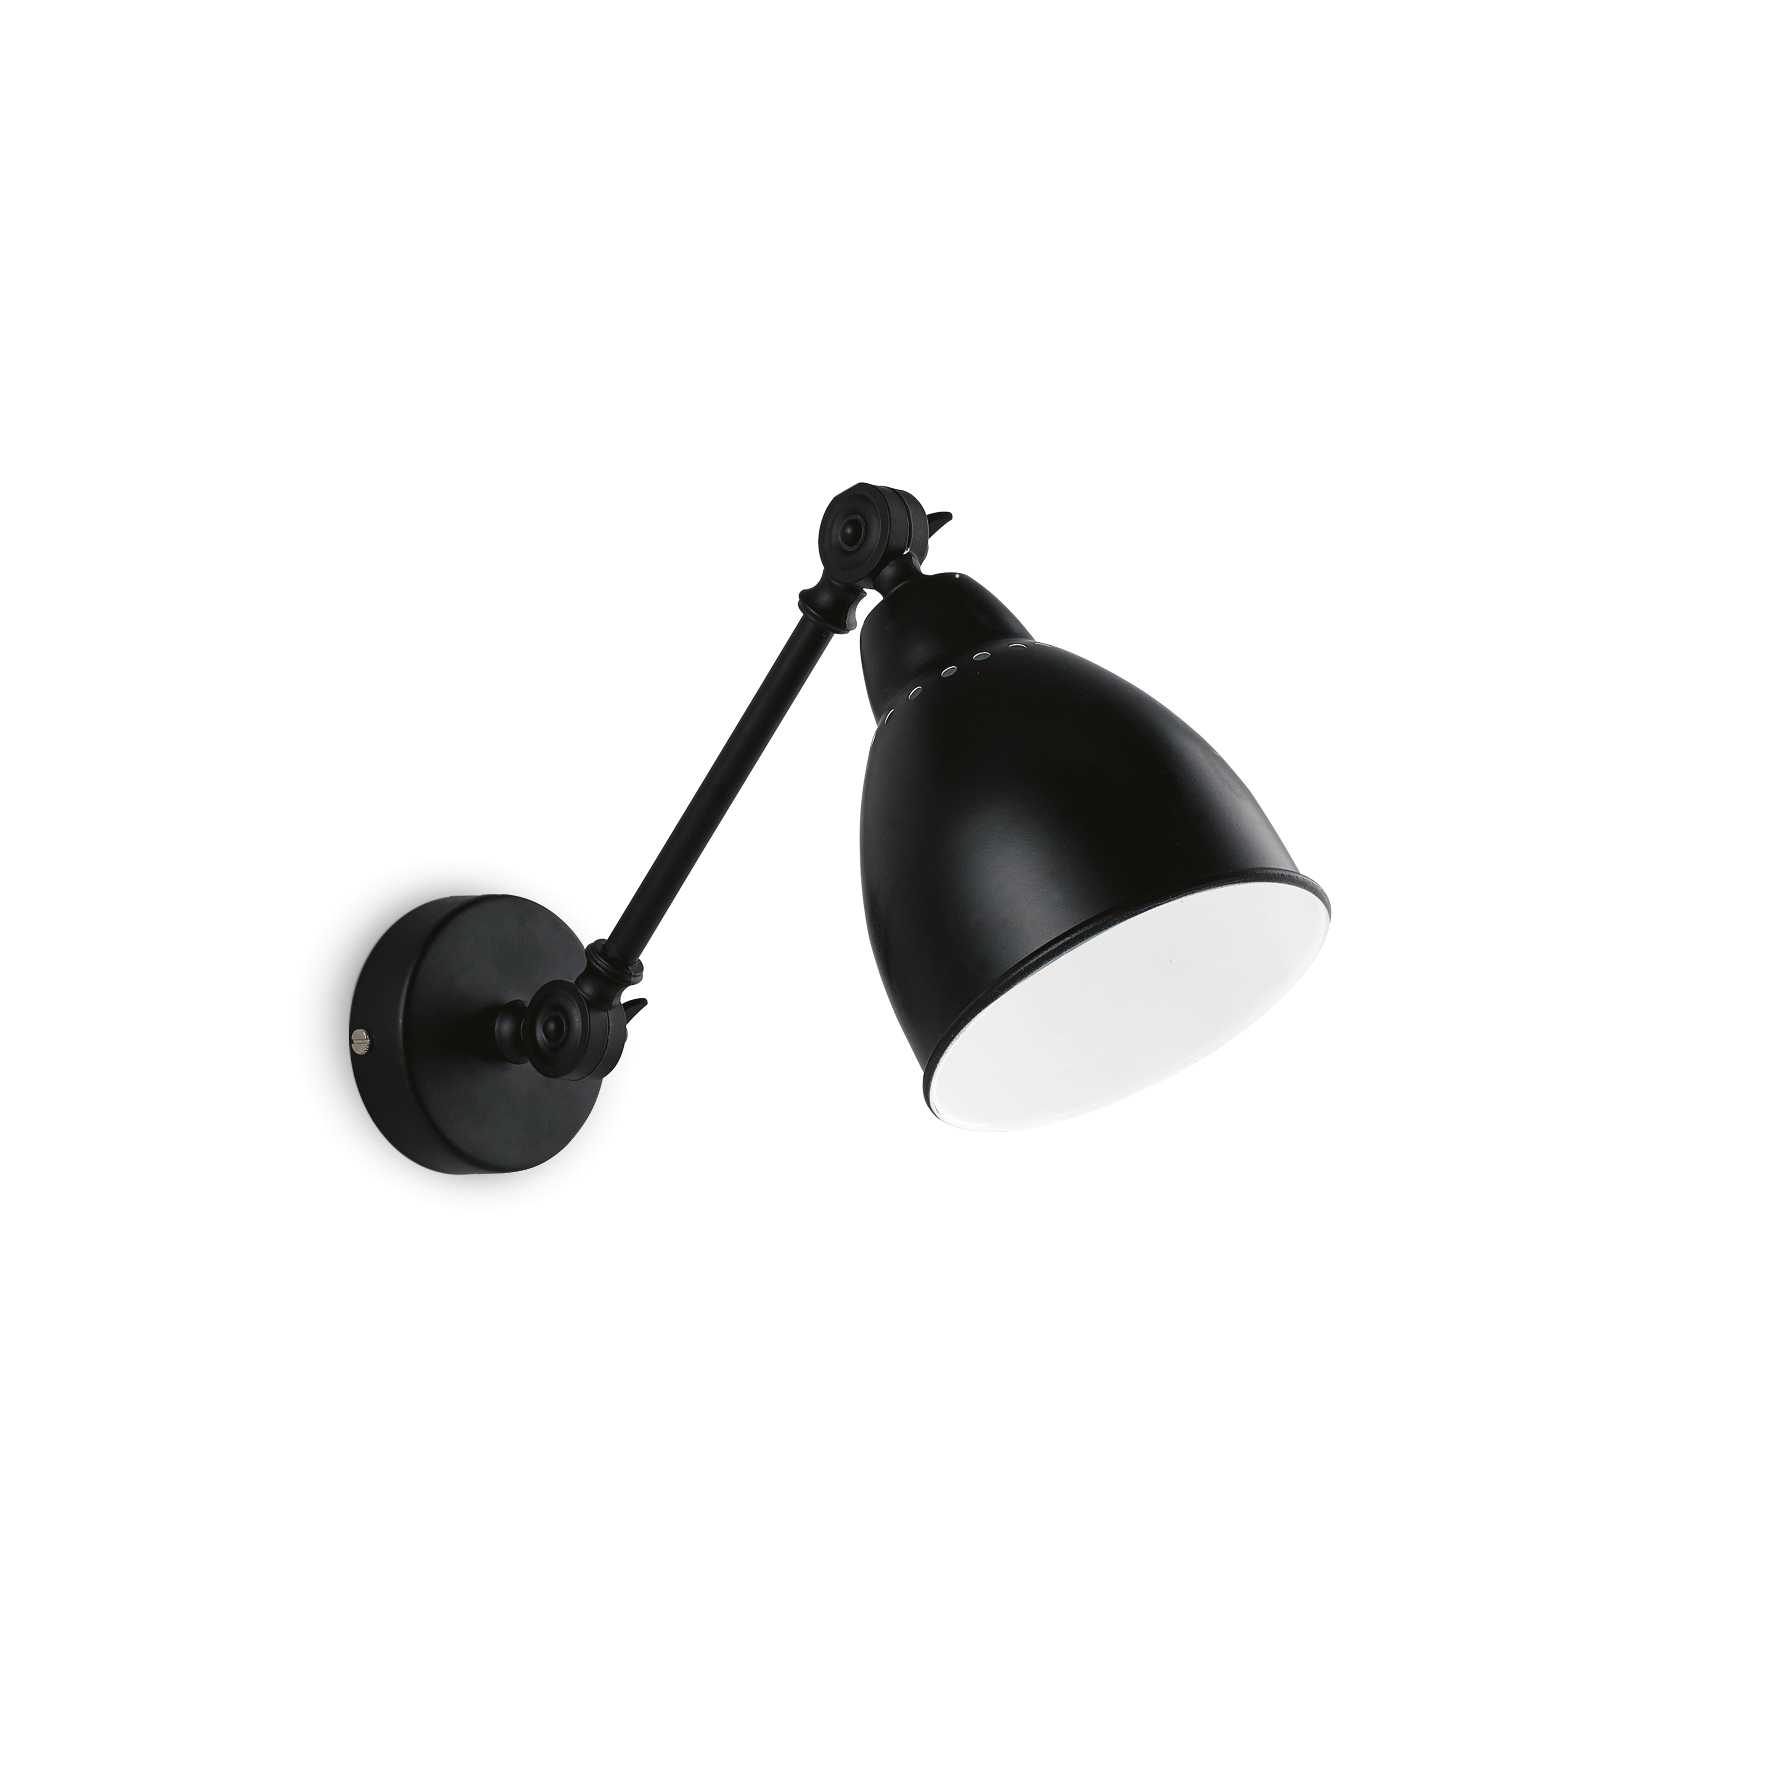 AD hotelska oprema Zidna lampa Newton ap1- Crne boje slika proizvoda